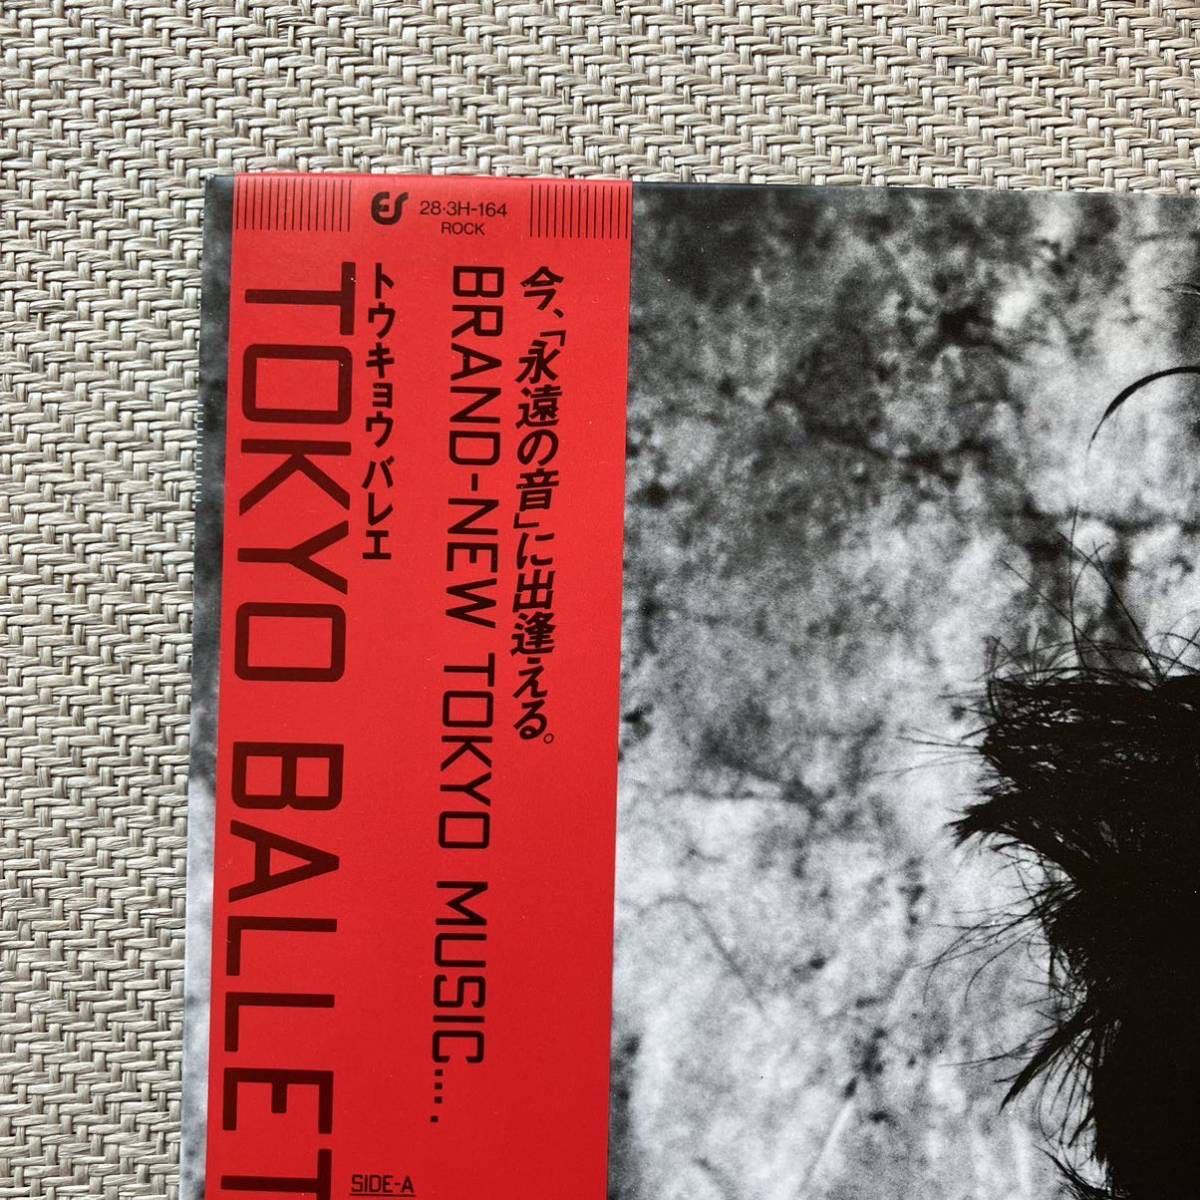  beautiful goods * obi attaching LP* Tsuchiya Masami (Masami Tsuchiya)[Tokyo Ballet( Tokyo ballet )]*1985 year 28-3H-164* peace mono New Wave City Pop